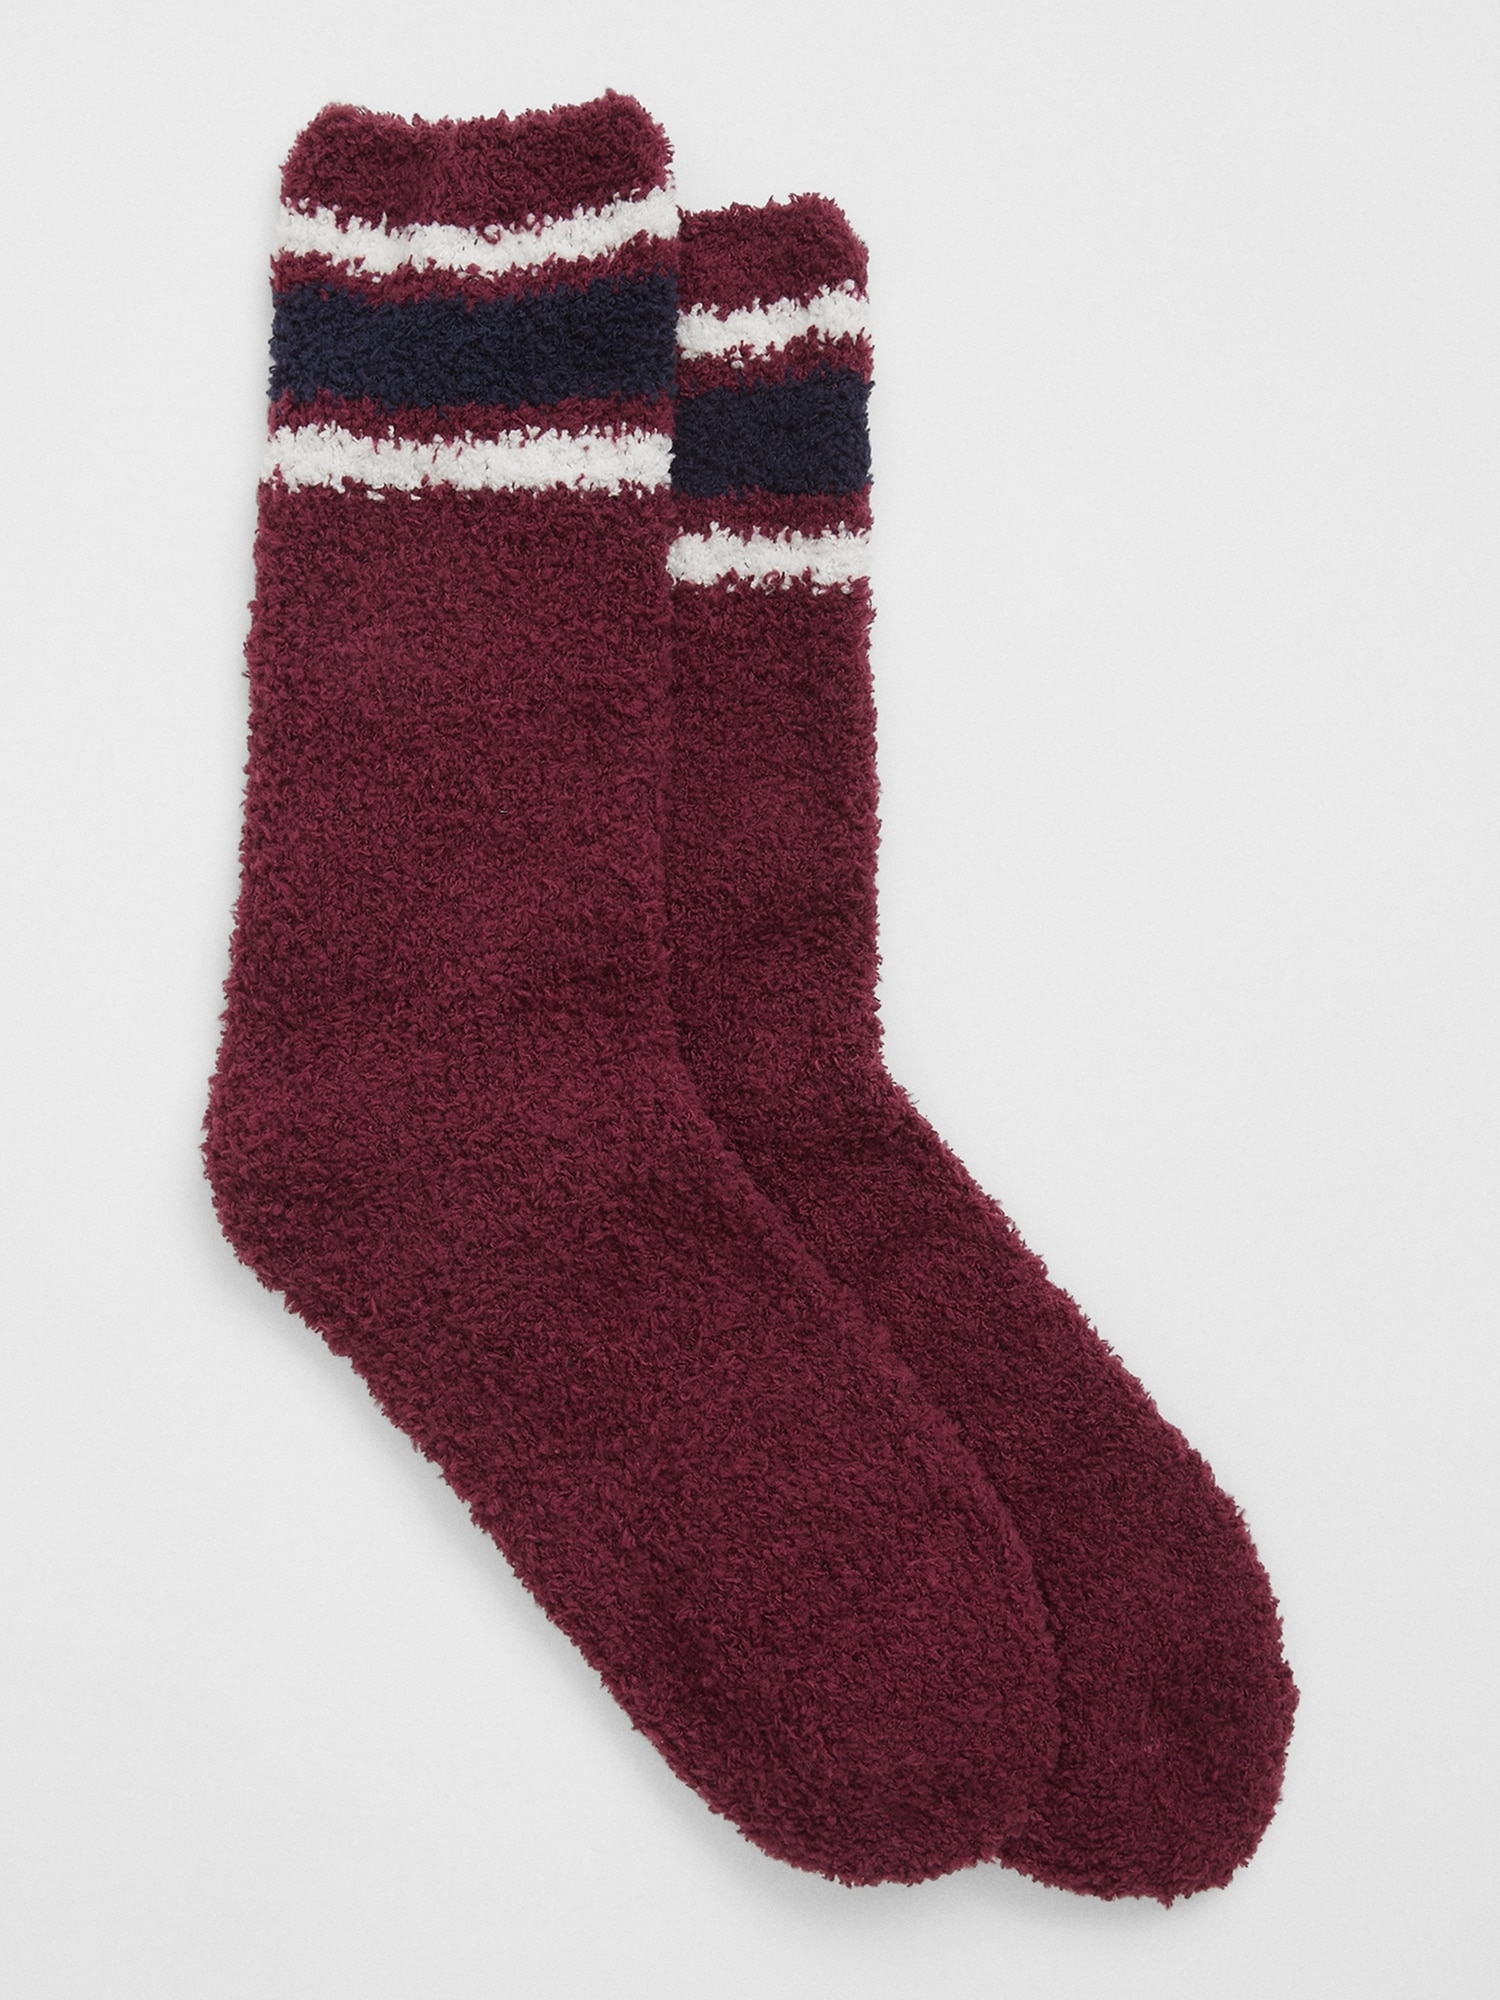 Gap Factory Men's Cozy Socks (June Bug) $0.85 + Free Shipping